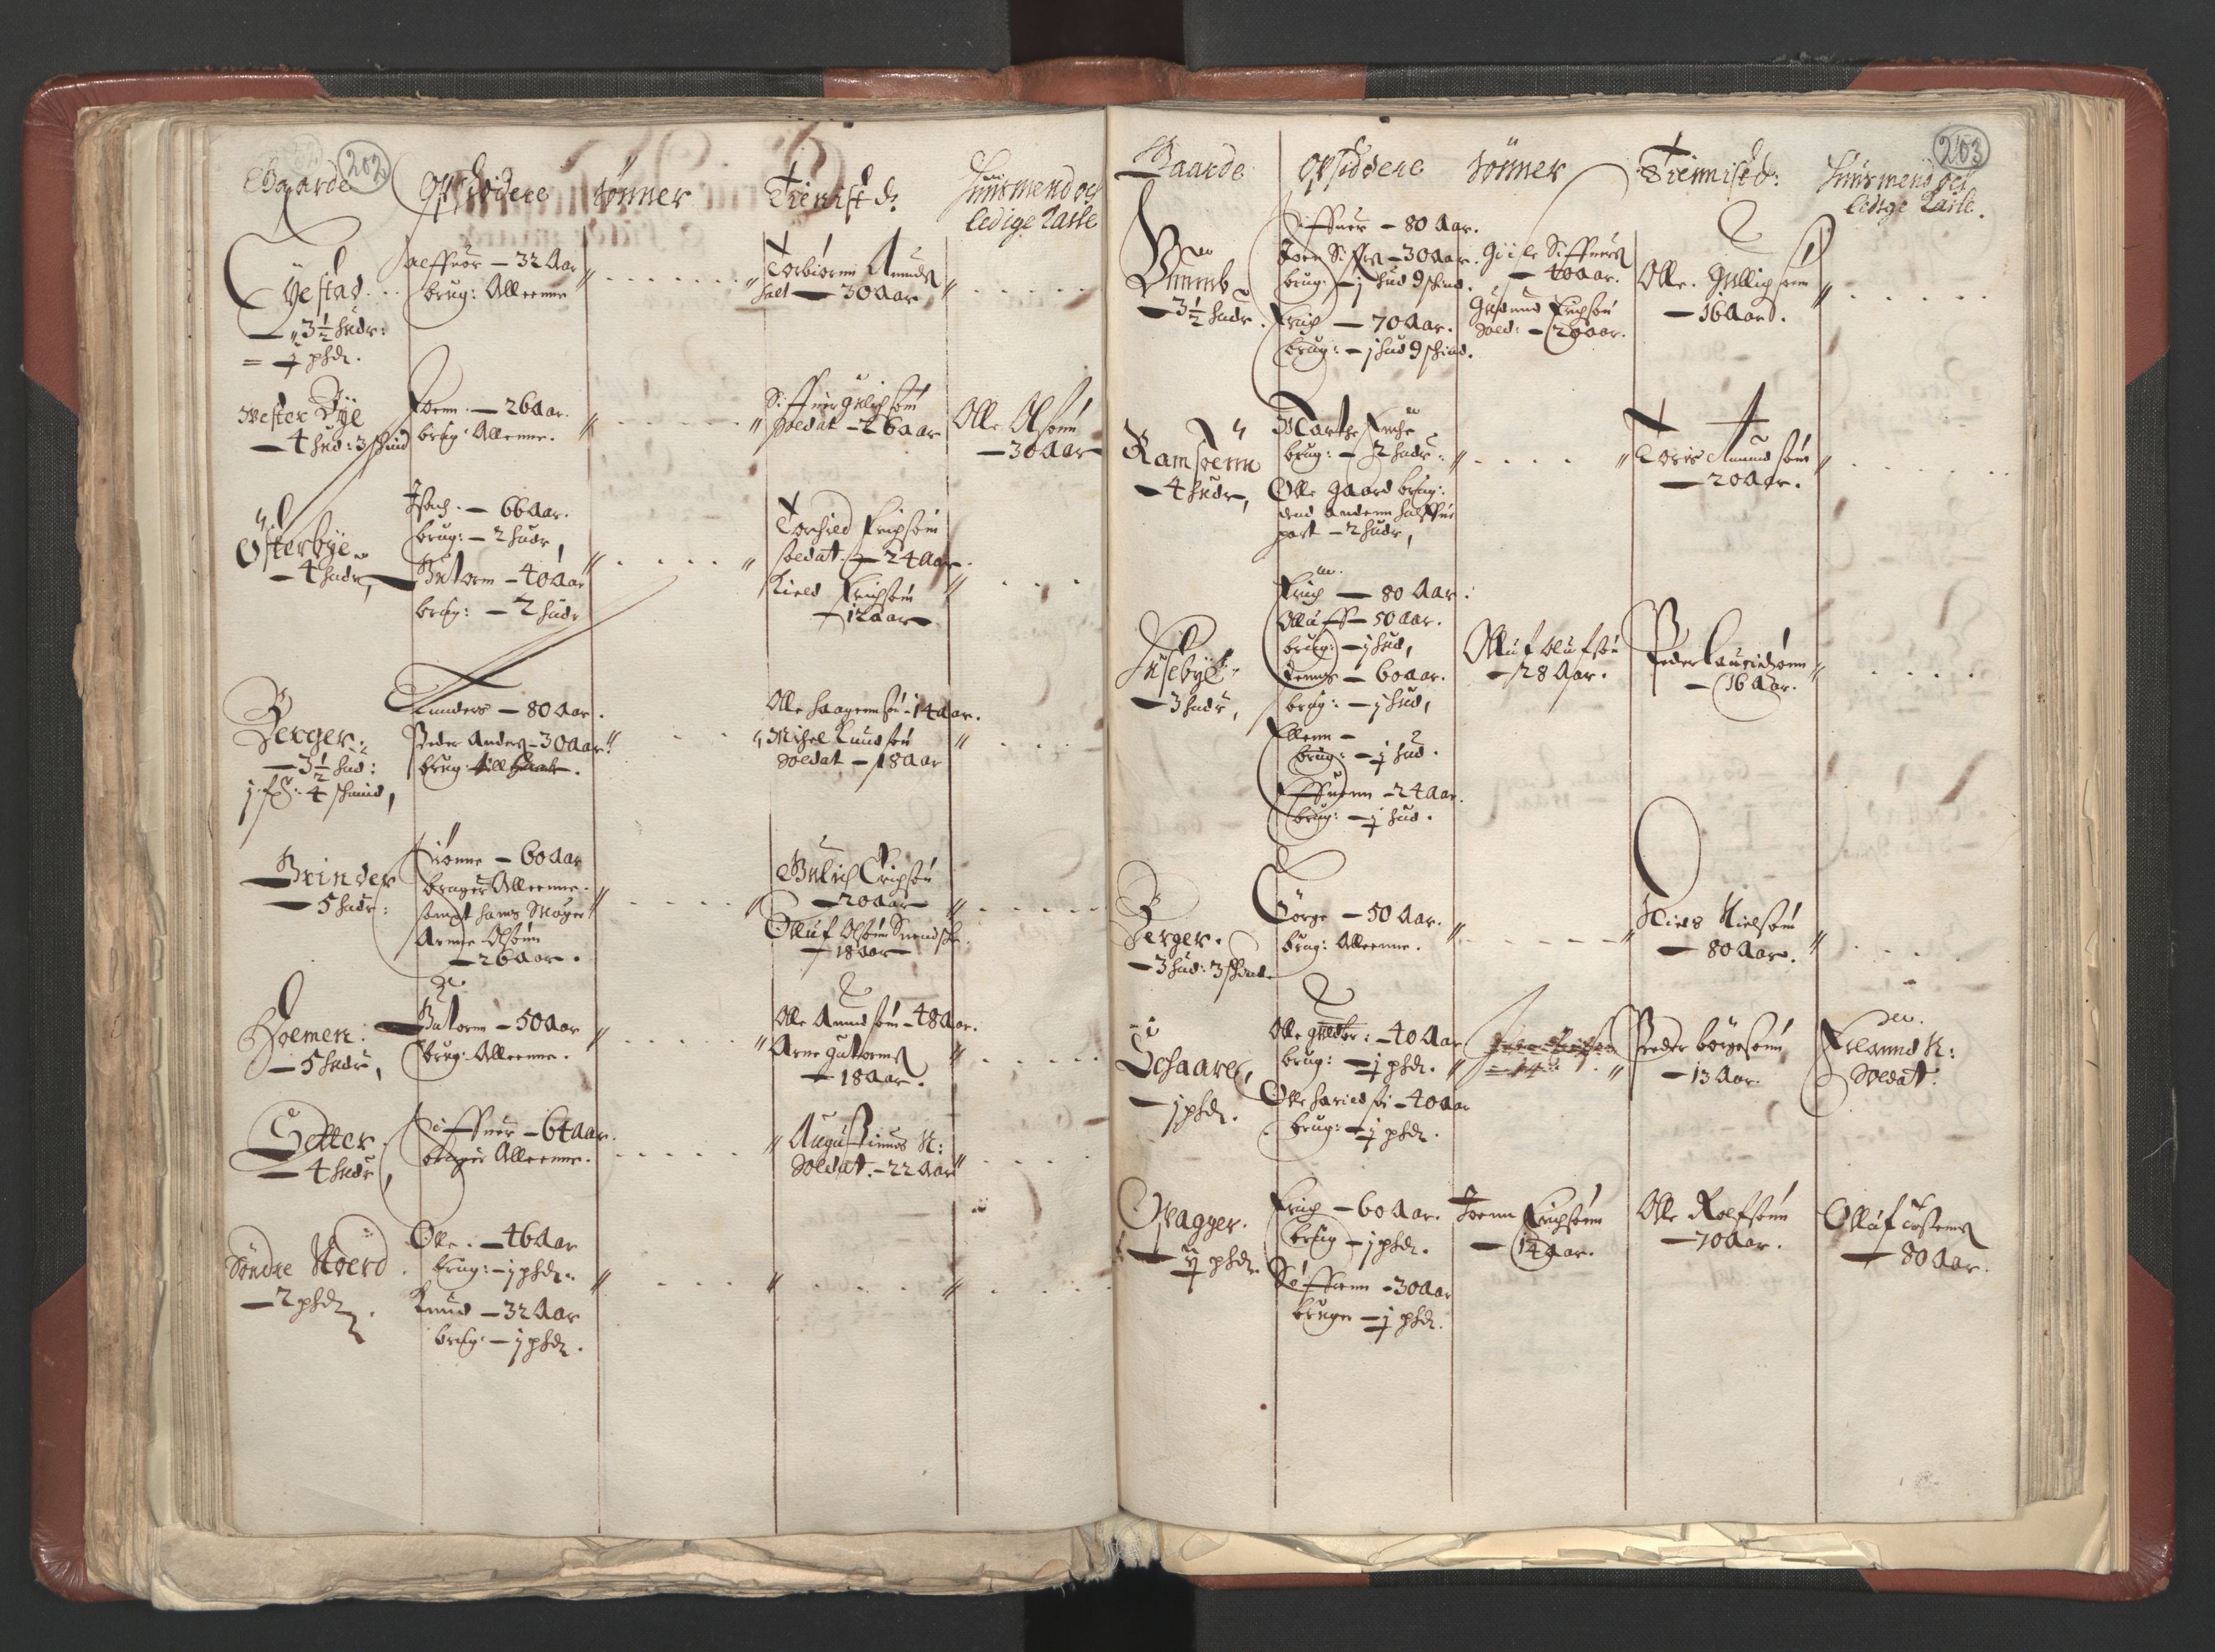 RA, Fogdenes og sorenskrivernes manntall 1664-1666, nr. 3: Hedmark fogderi og Solør, Østerdal og Odal fogderi, 1664, s. 202-203